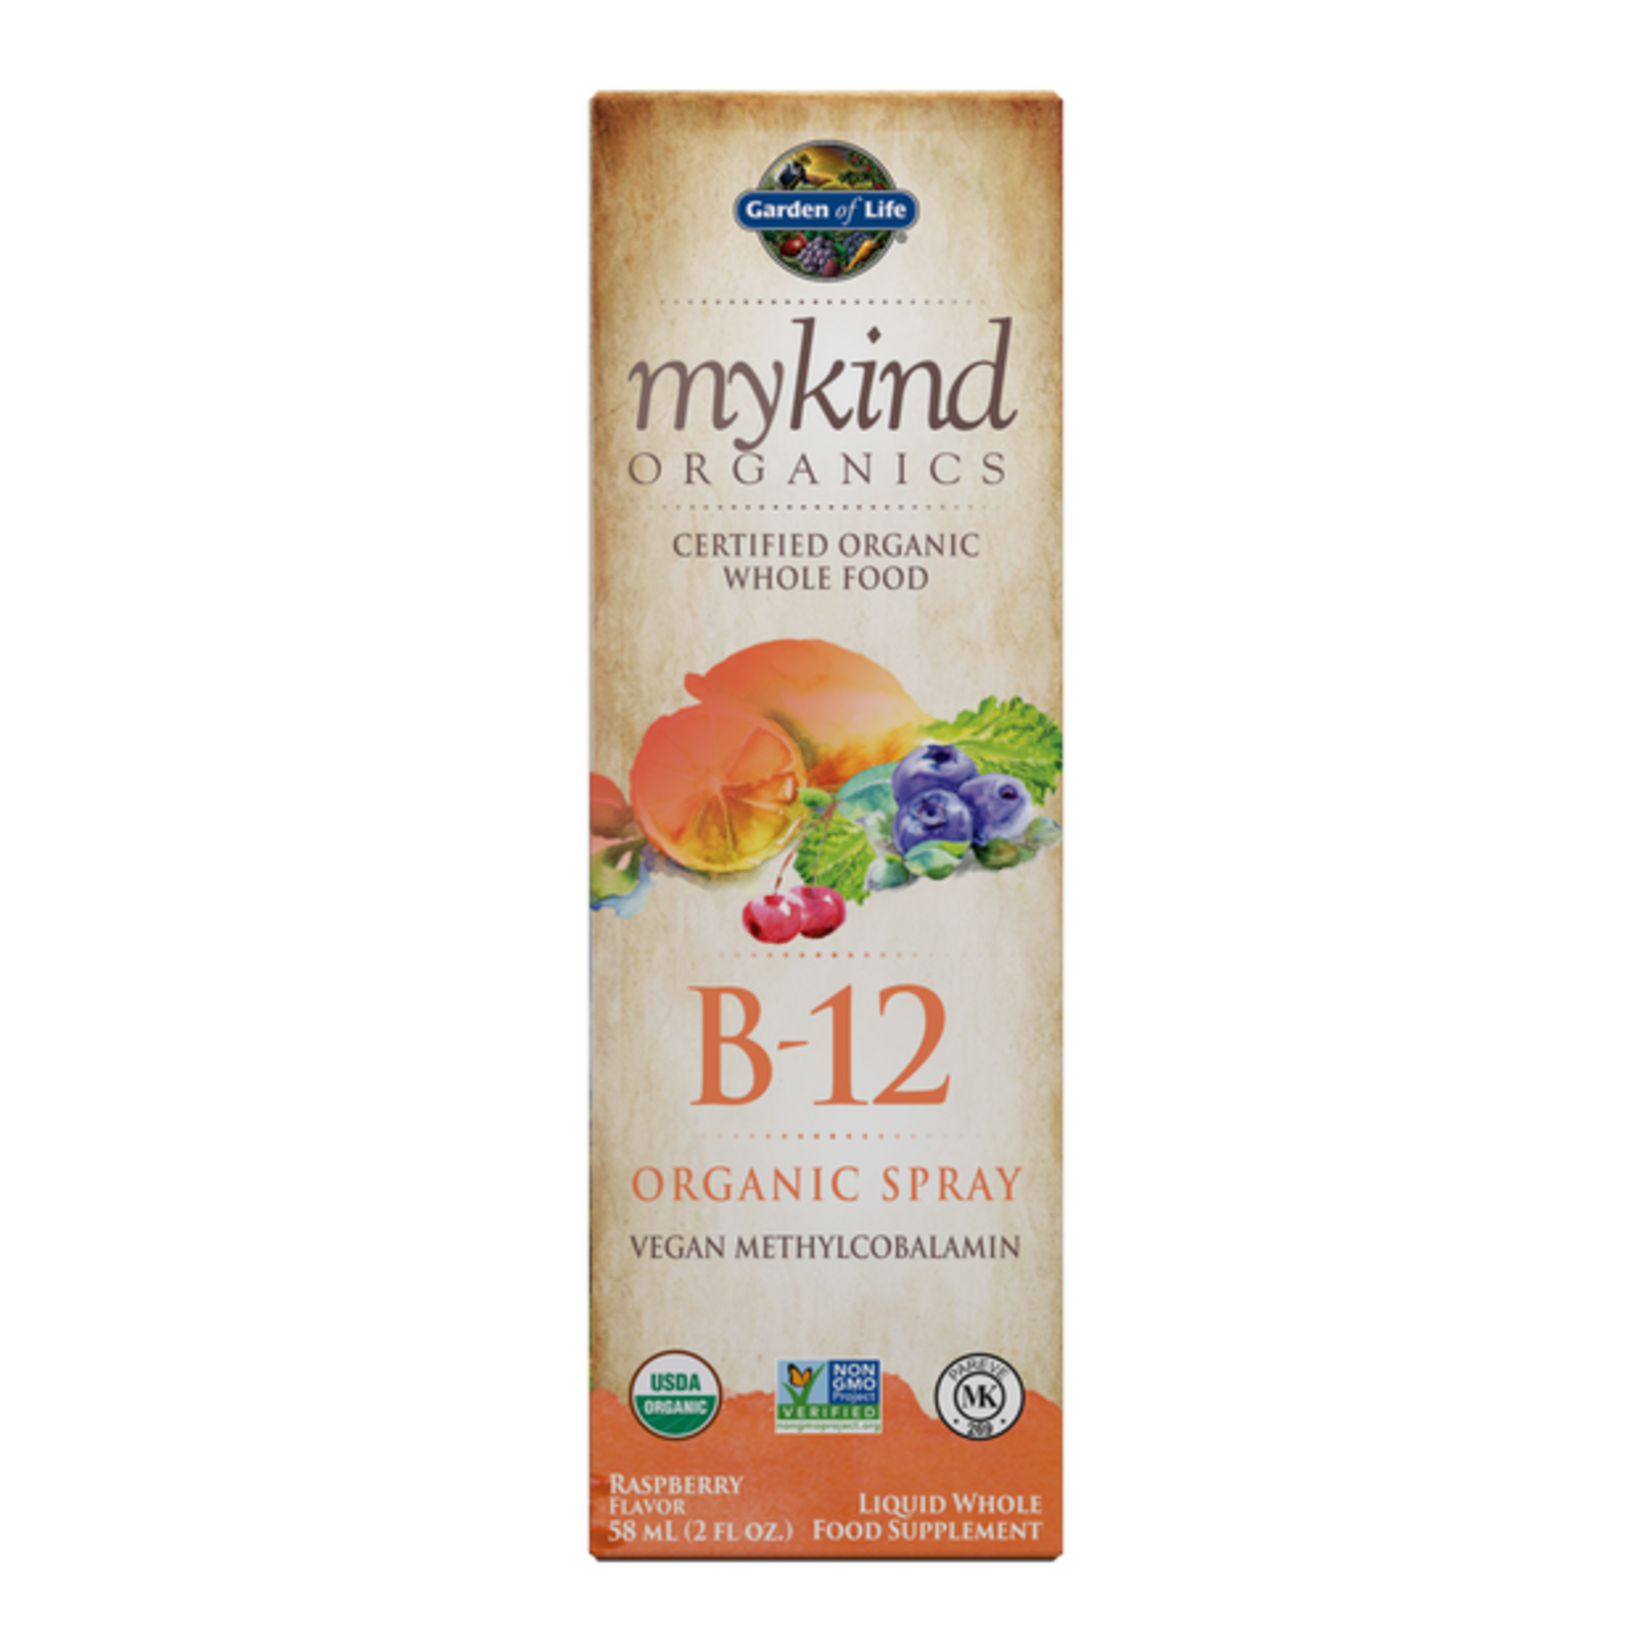 Garden of Life Garden of Life - Mykind Organics B-12 Organic Spray Raspberry - 2 oz